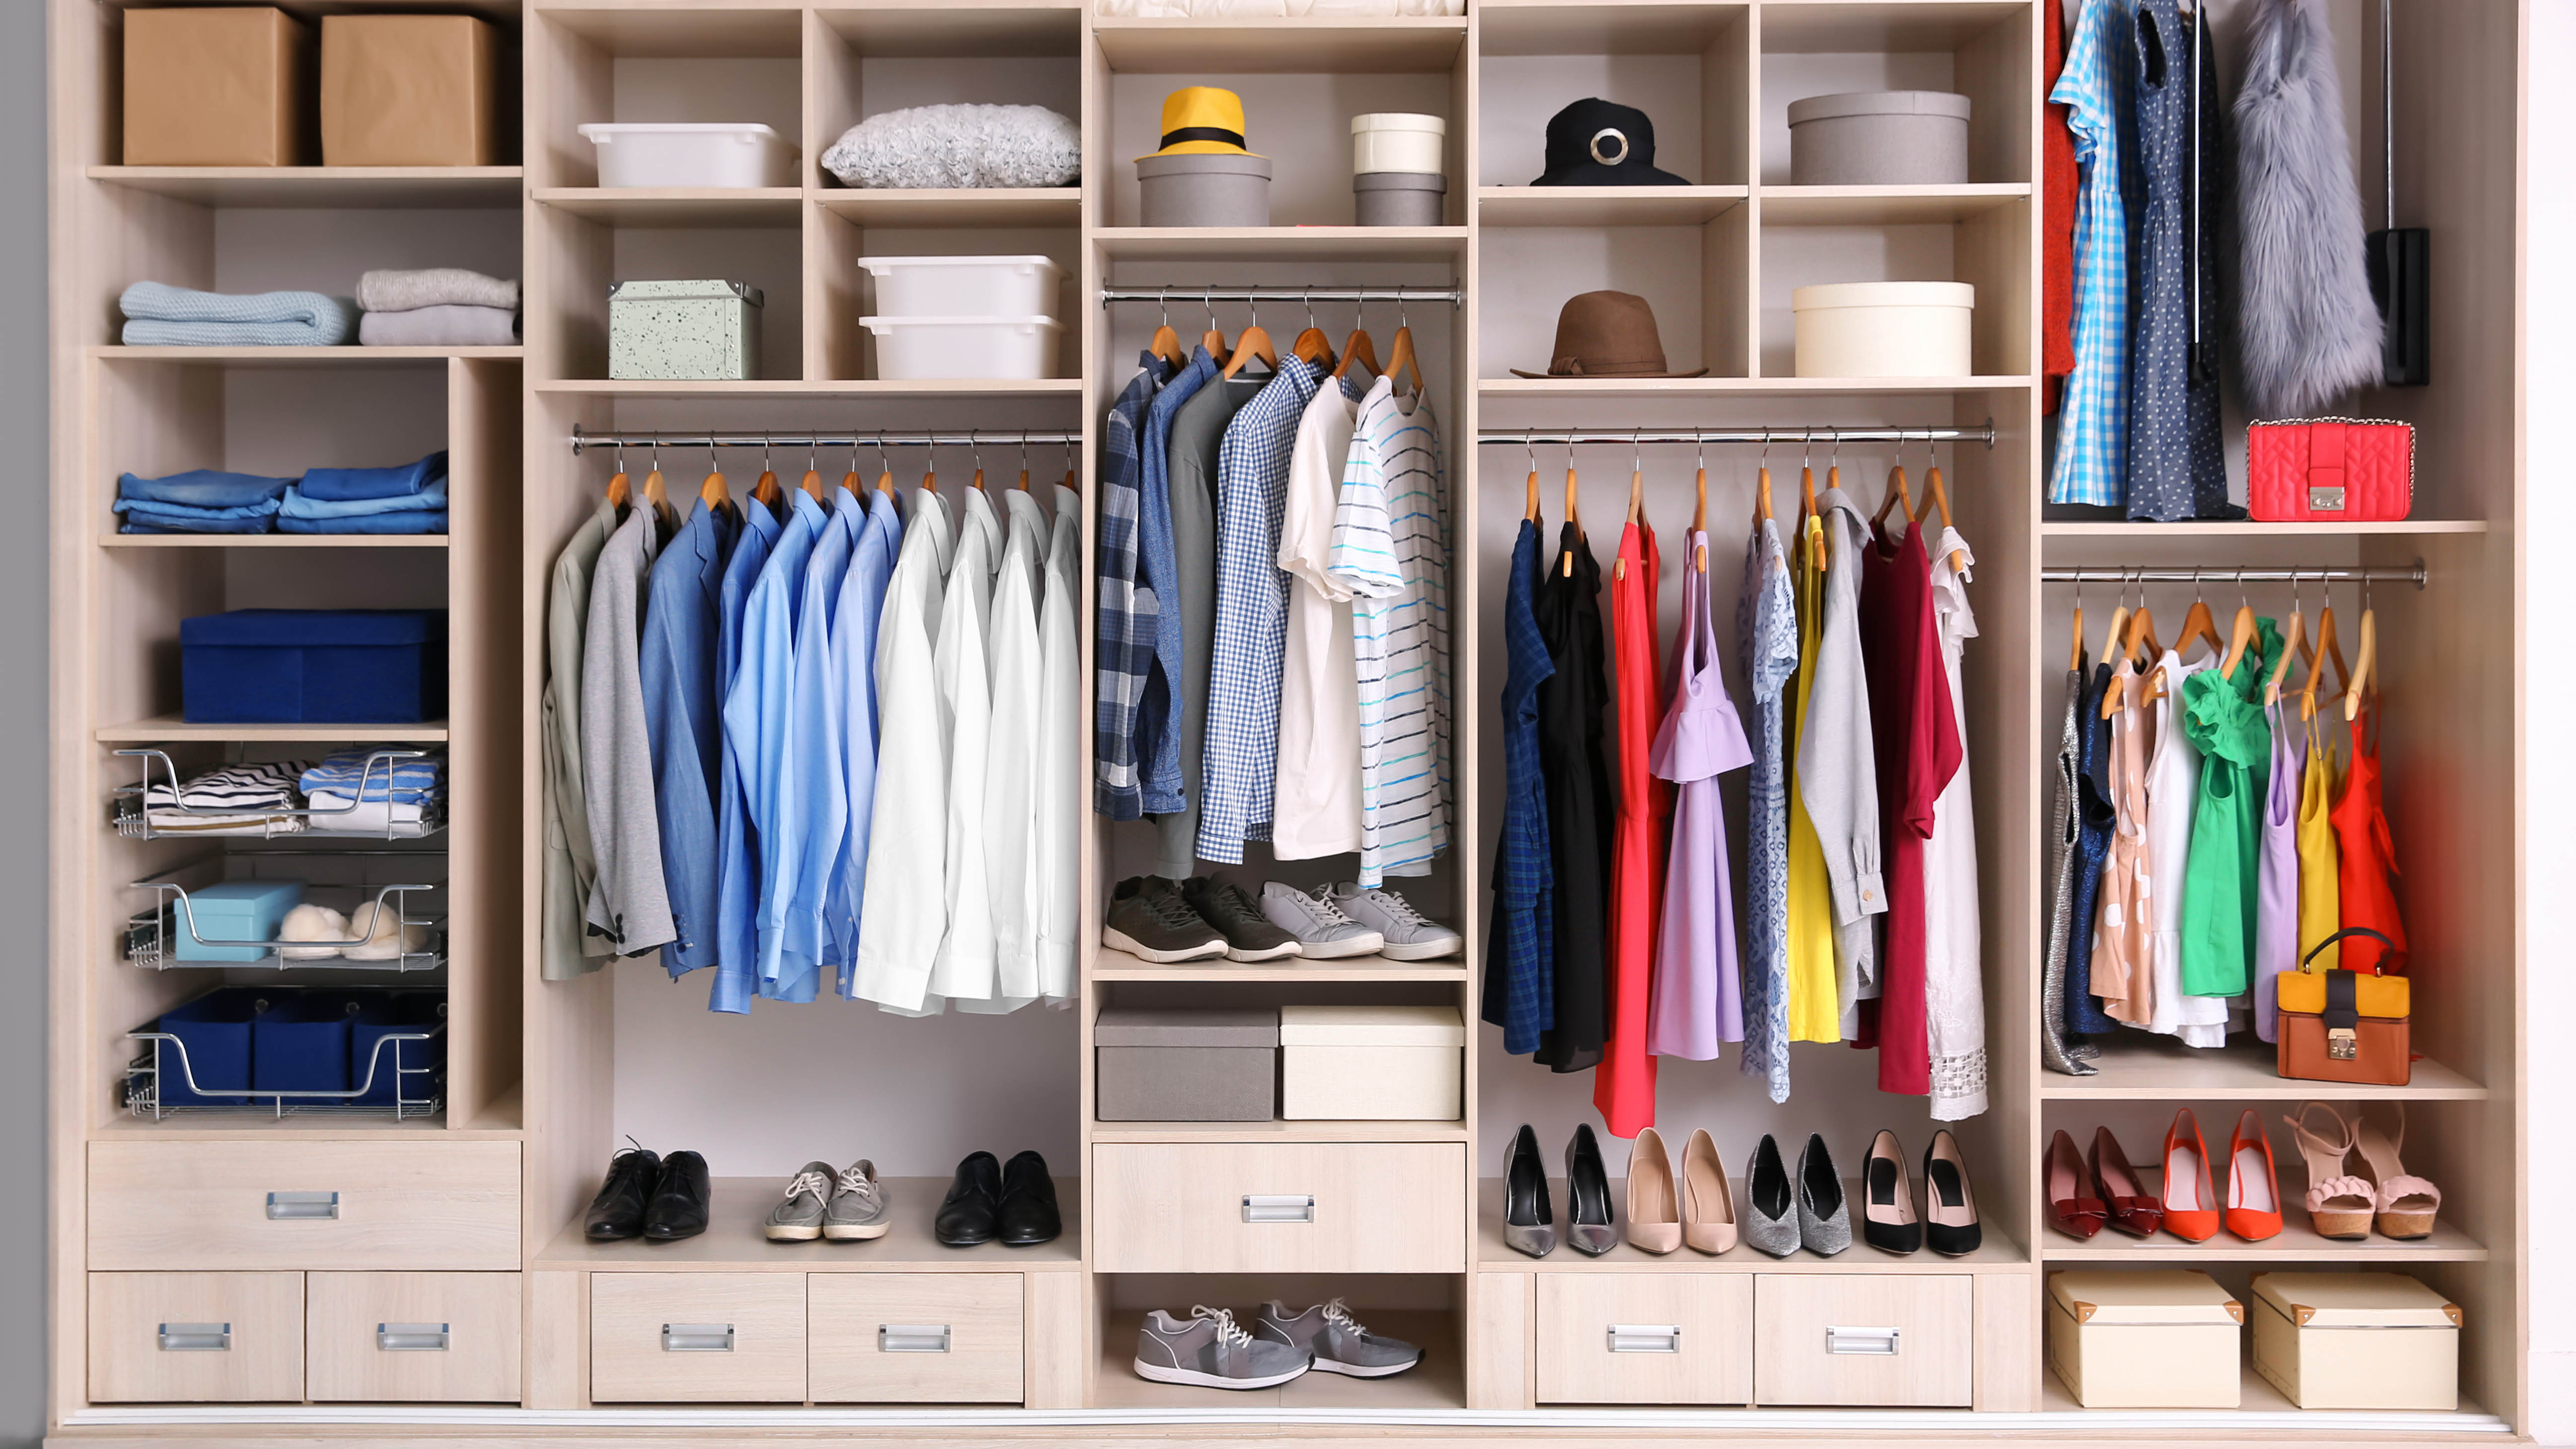 7 ways to organize your wardrobe, according to experts